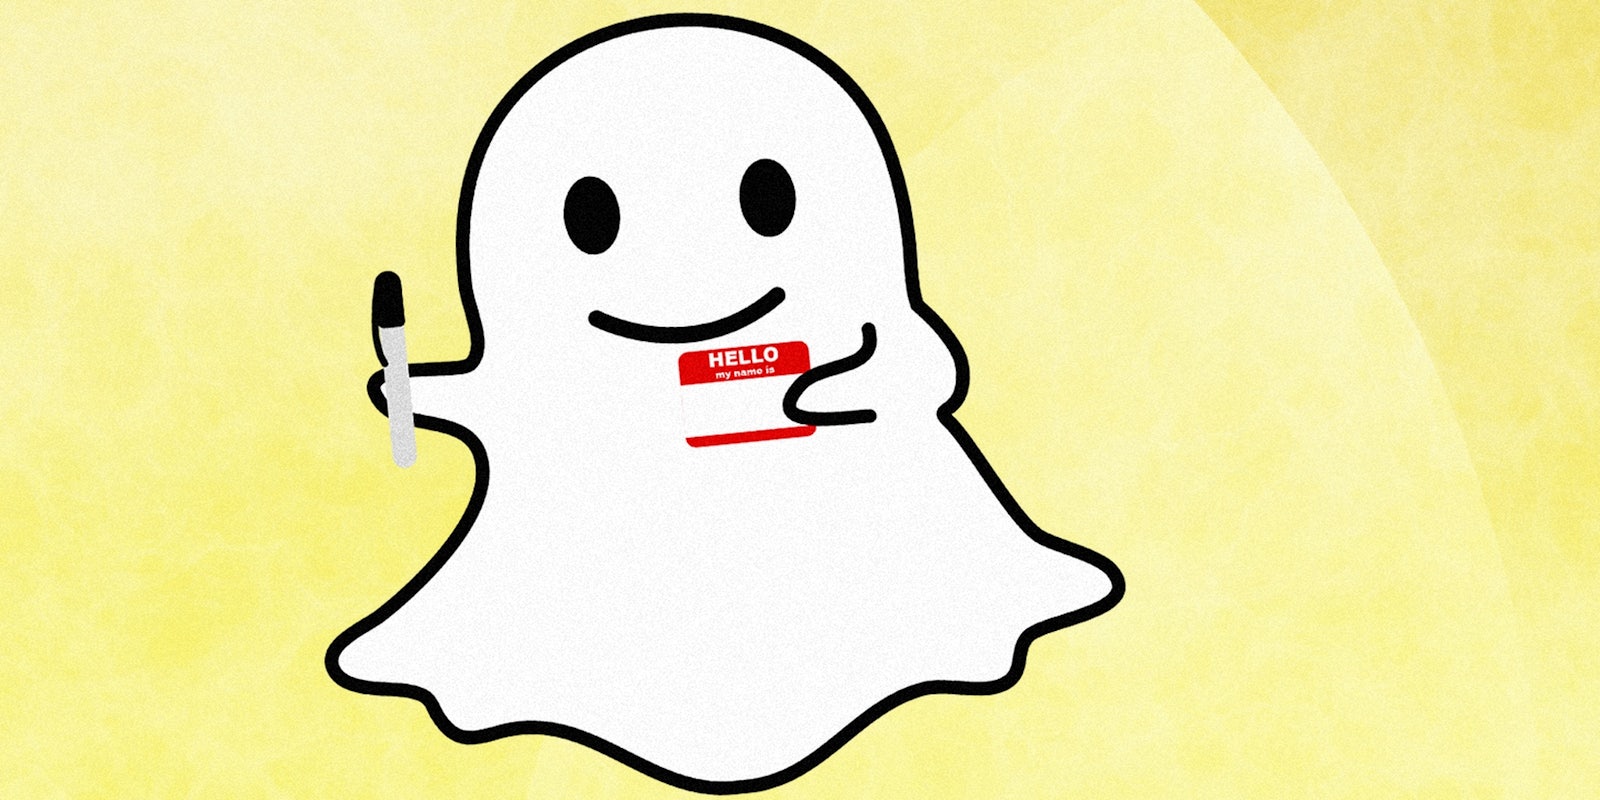 How to change Snapchat username